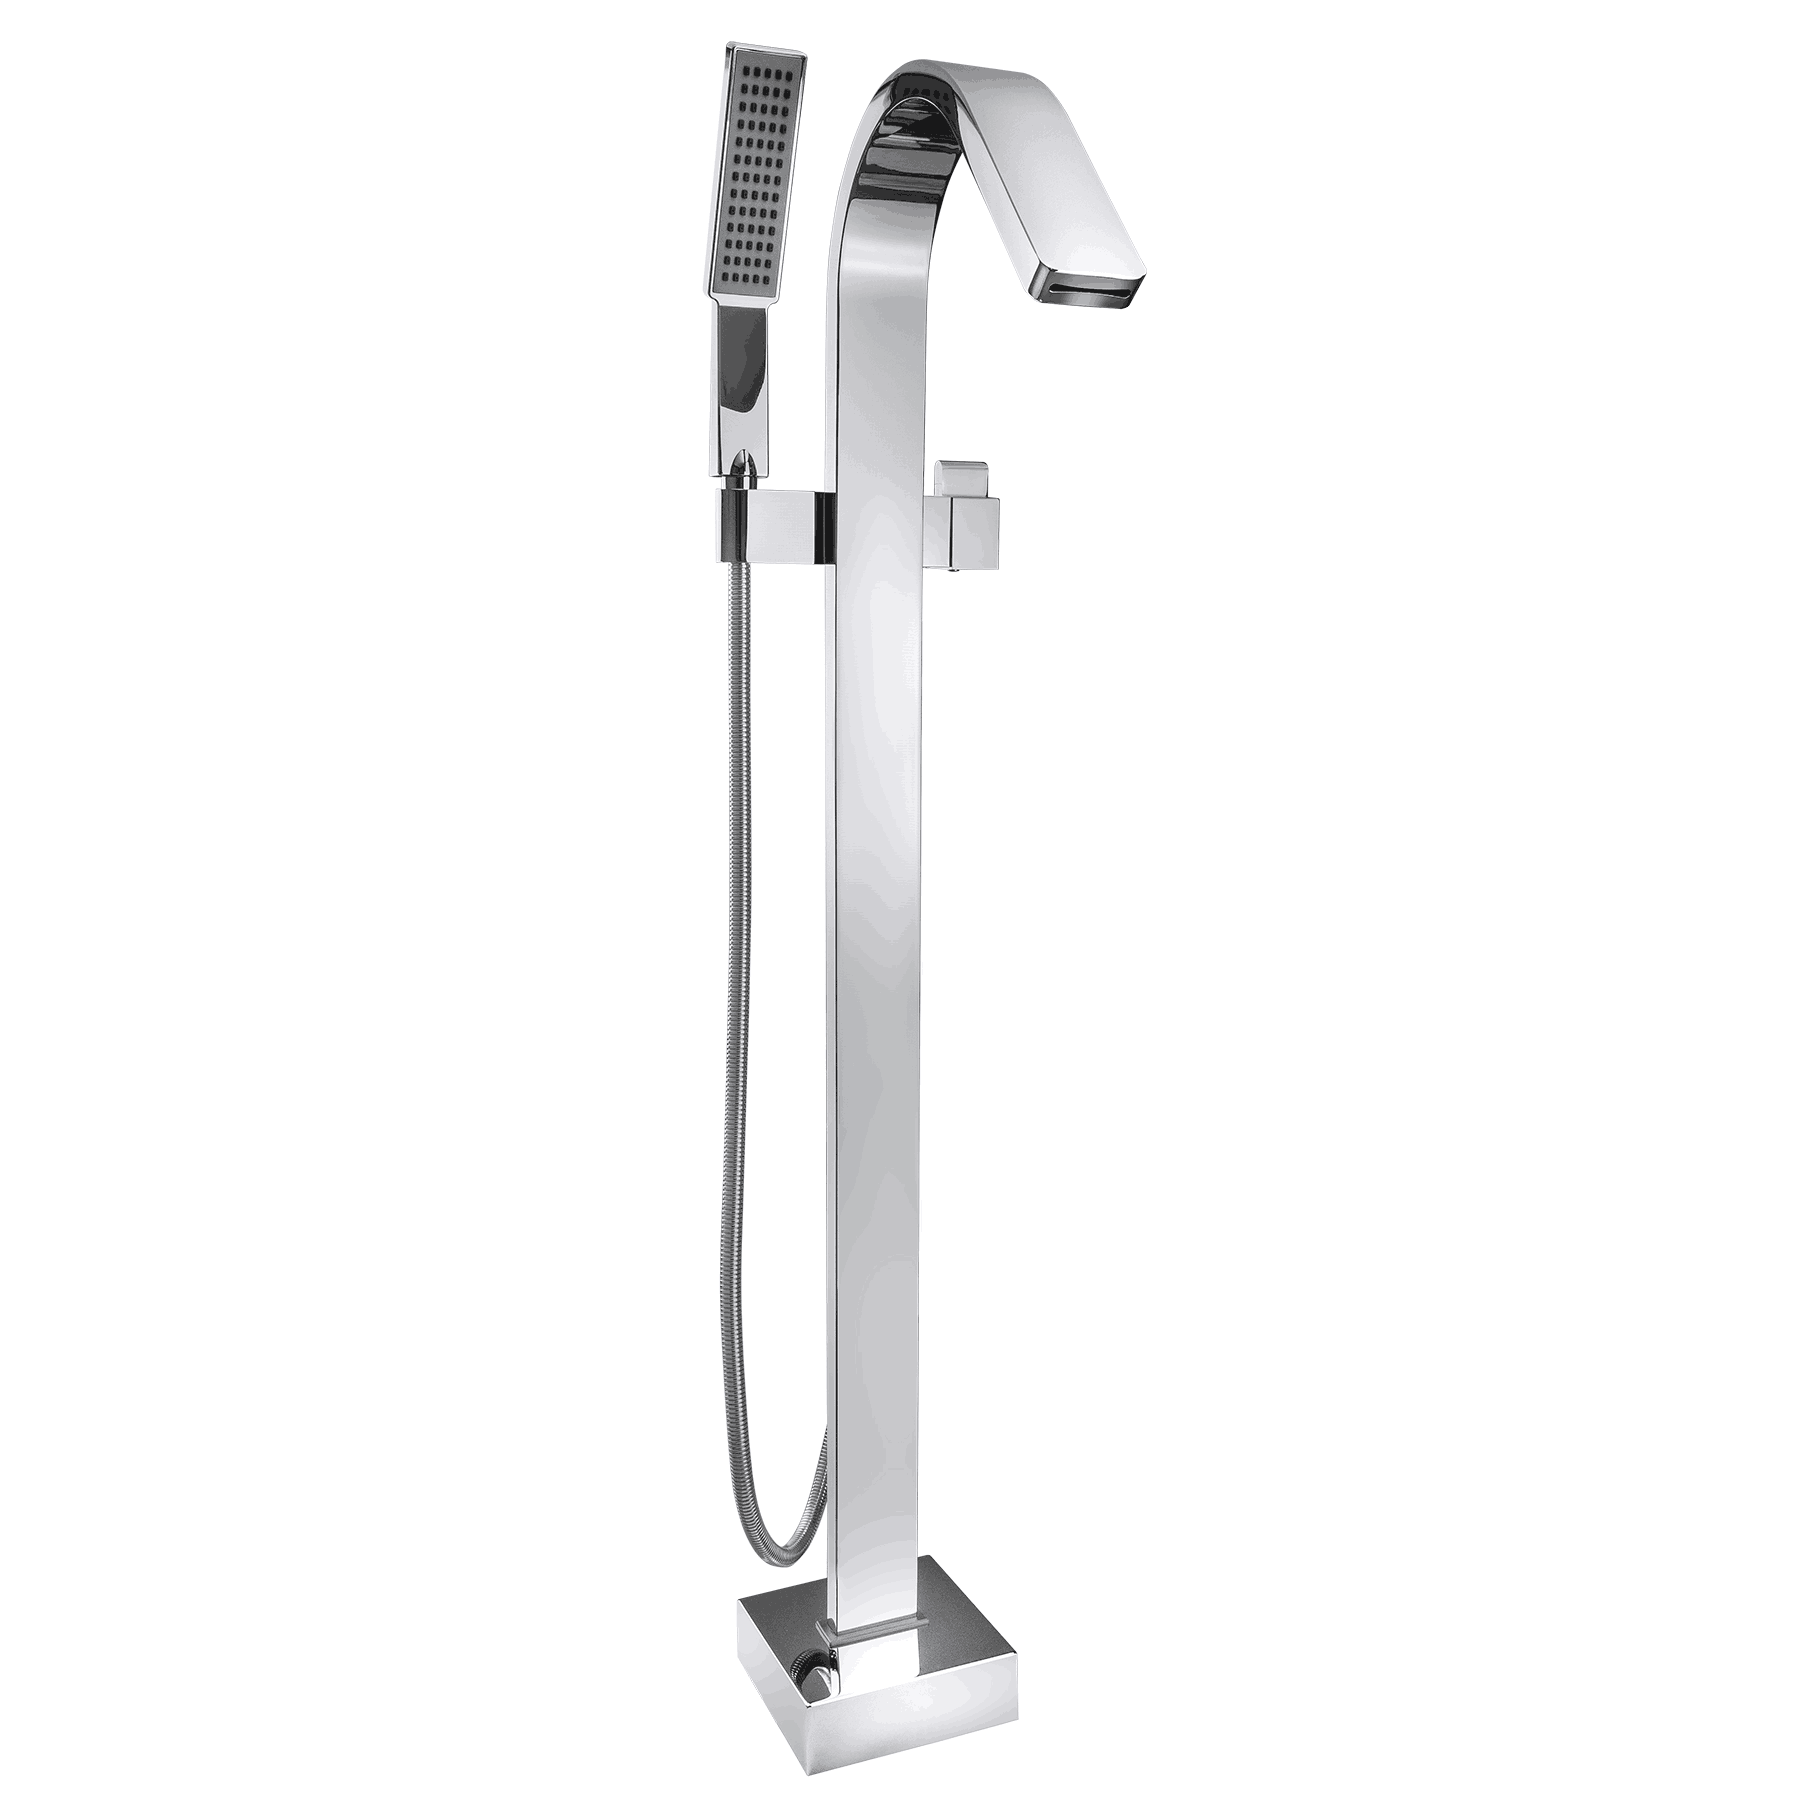 Simple Design High Quality Freestanding Bathtub Faucet DF-02102